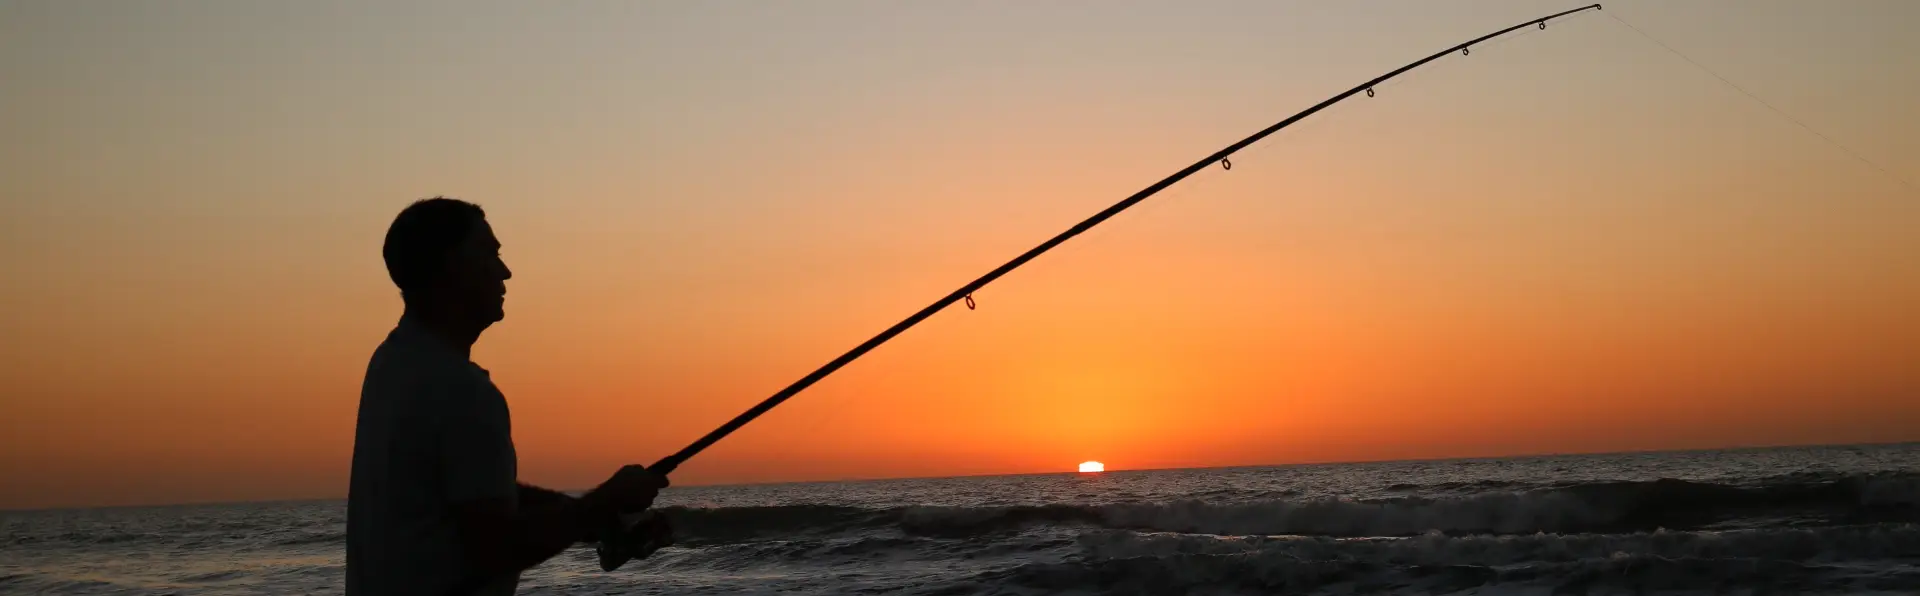 Pêche de plage en Gambie